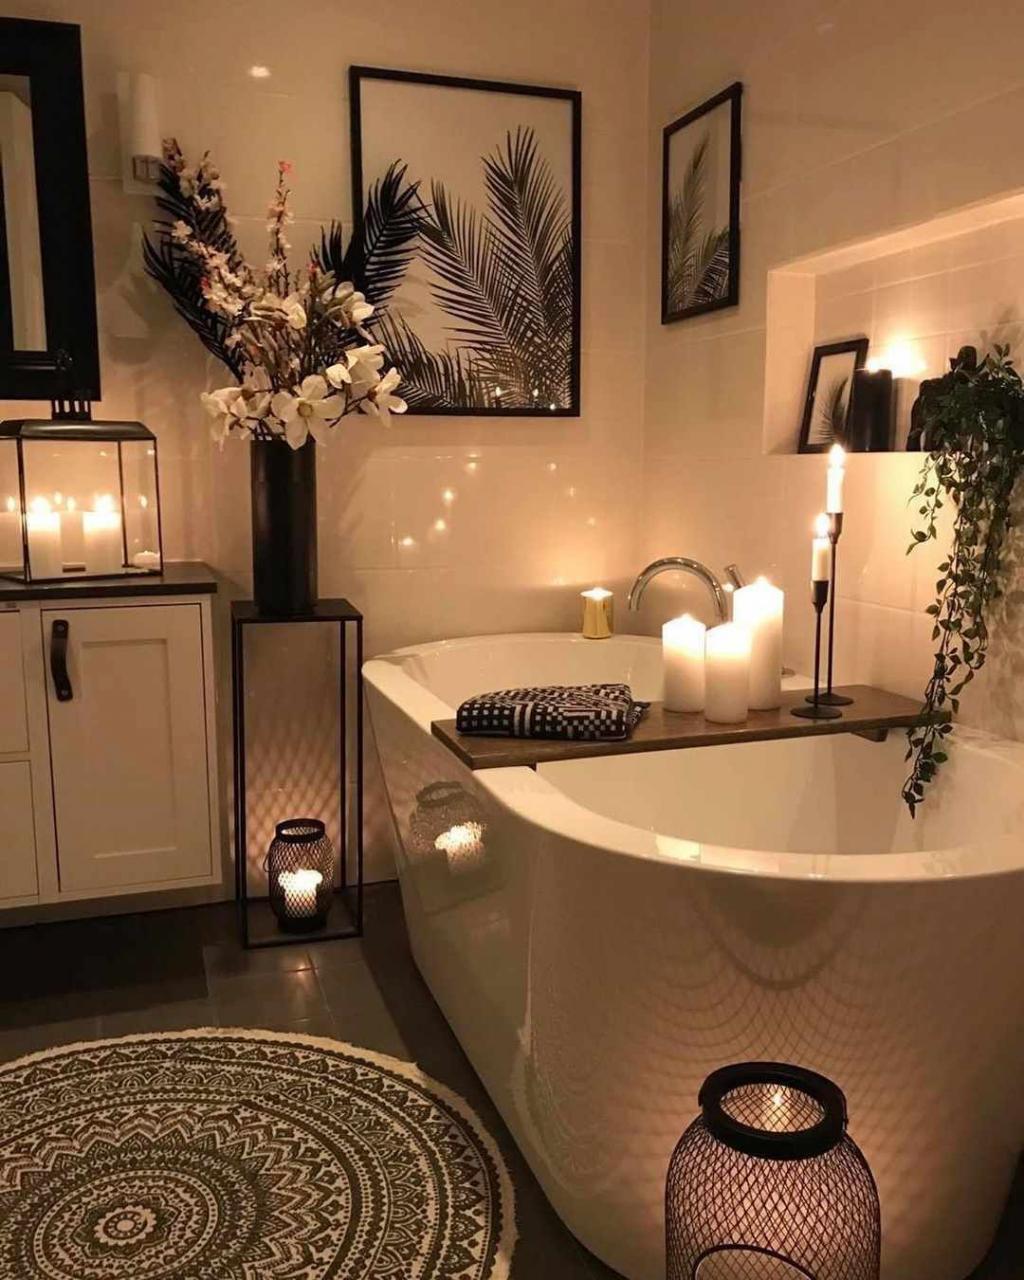 Try These 9 Ways to Create a Zen Bathroom Bathroom interior design